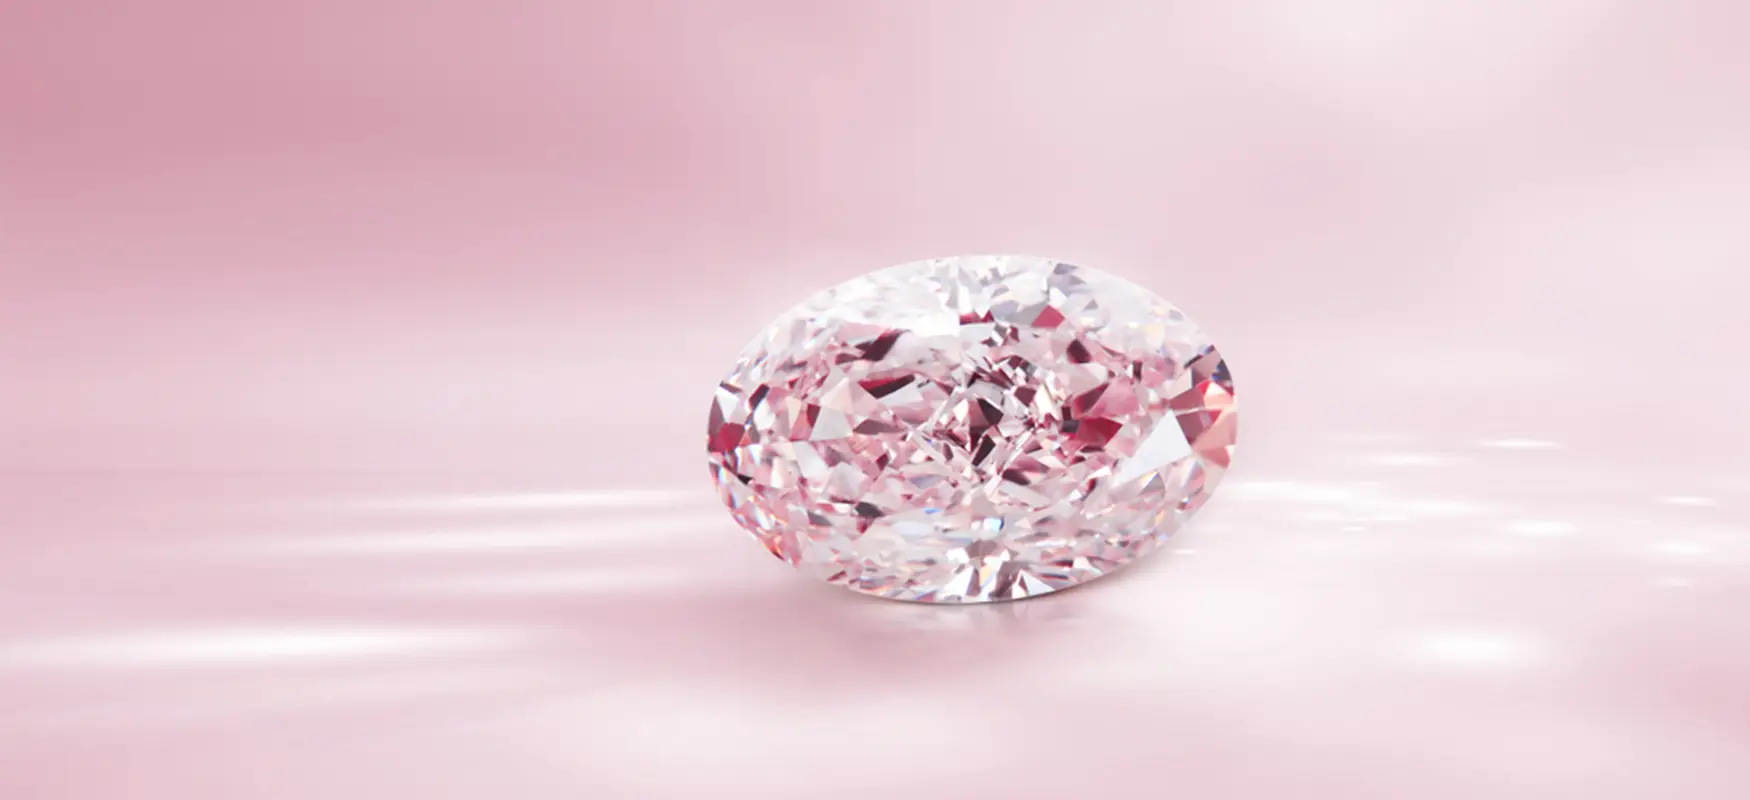 P for Pink Diamond